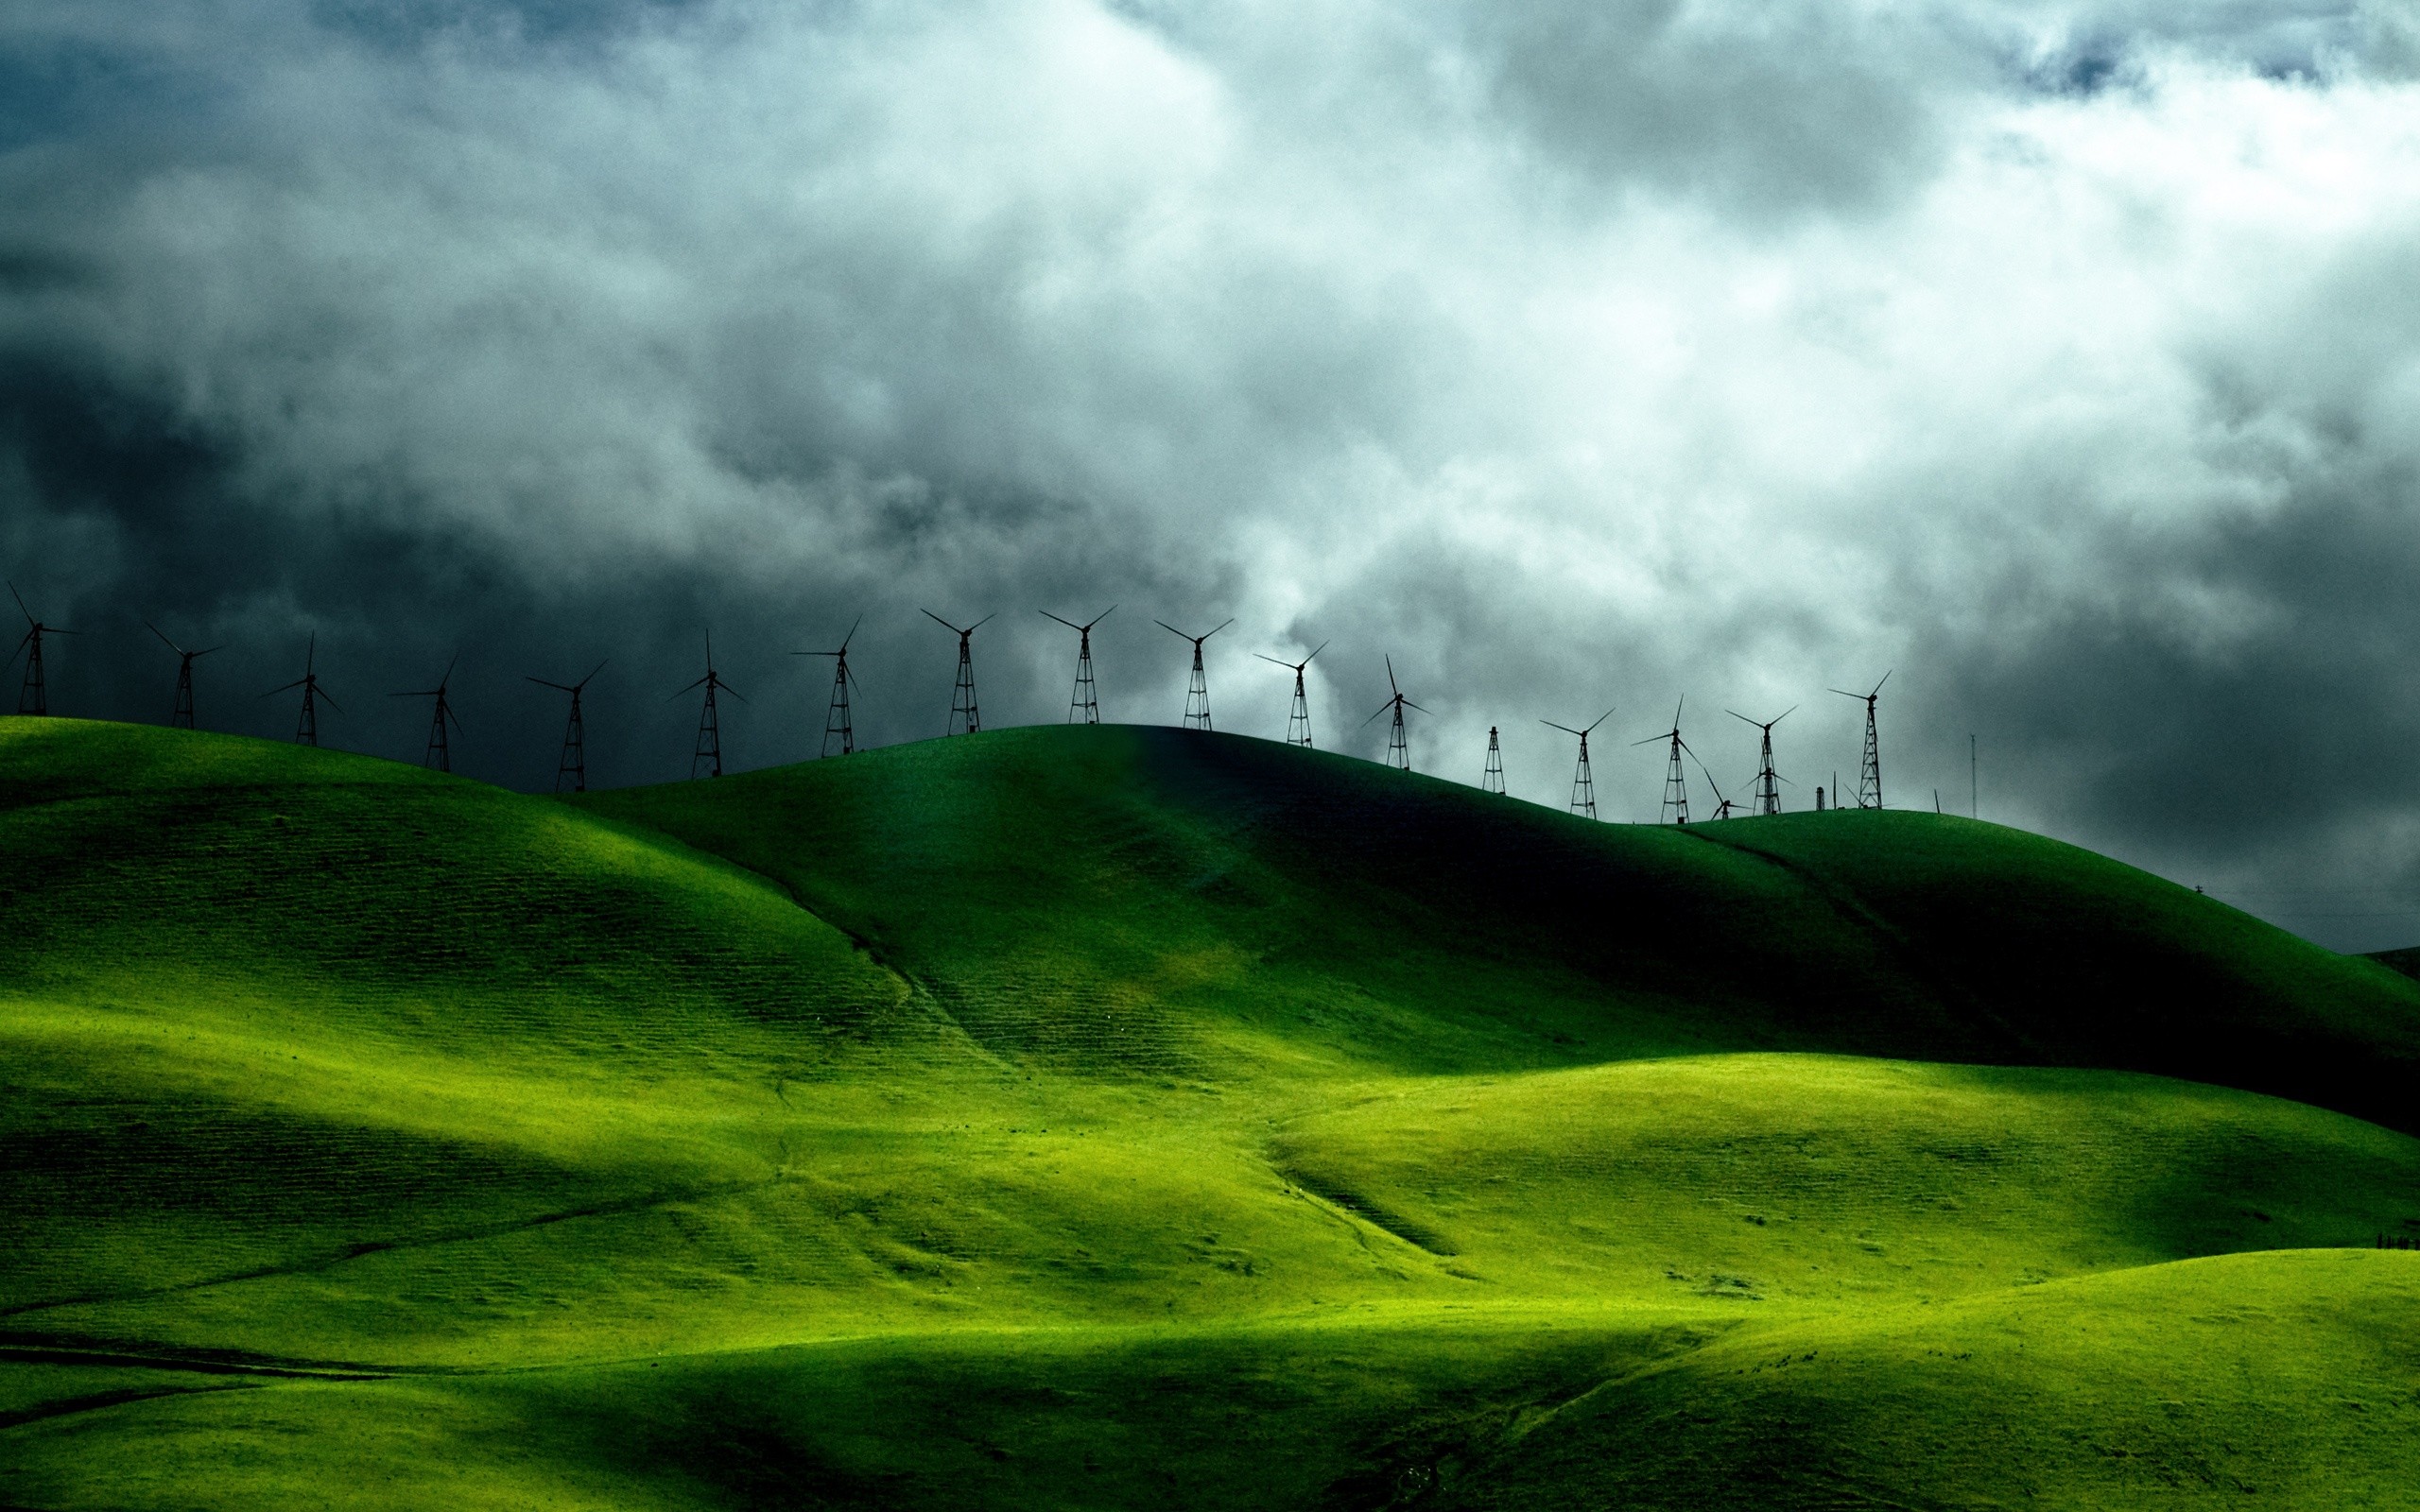 General 2560x1600 landscape clouds dark field outdoors hills wind turbine